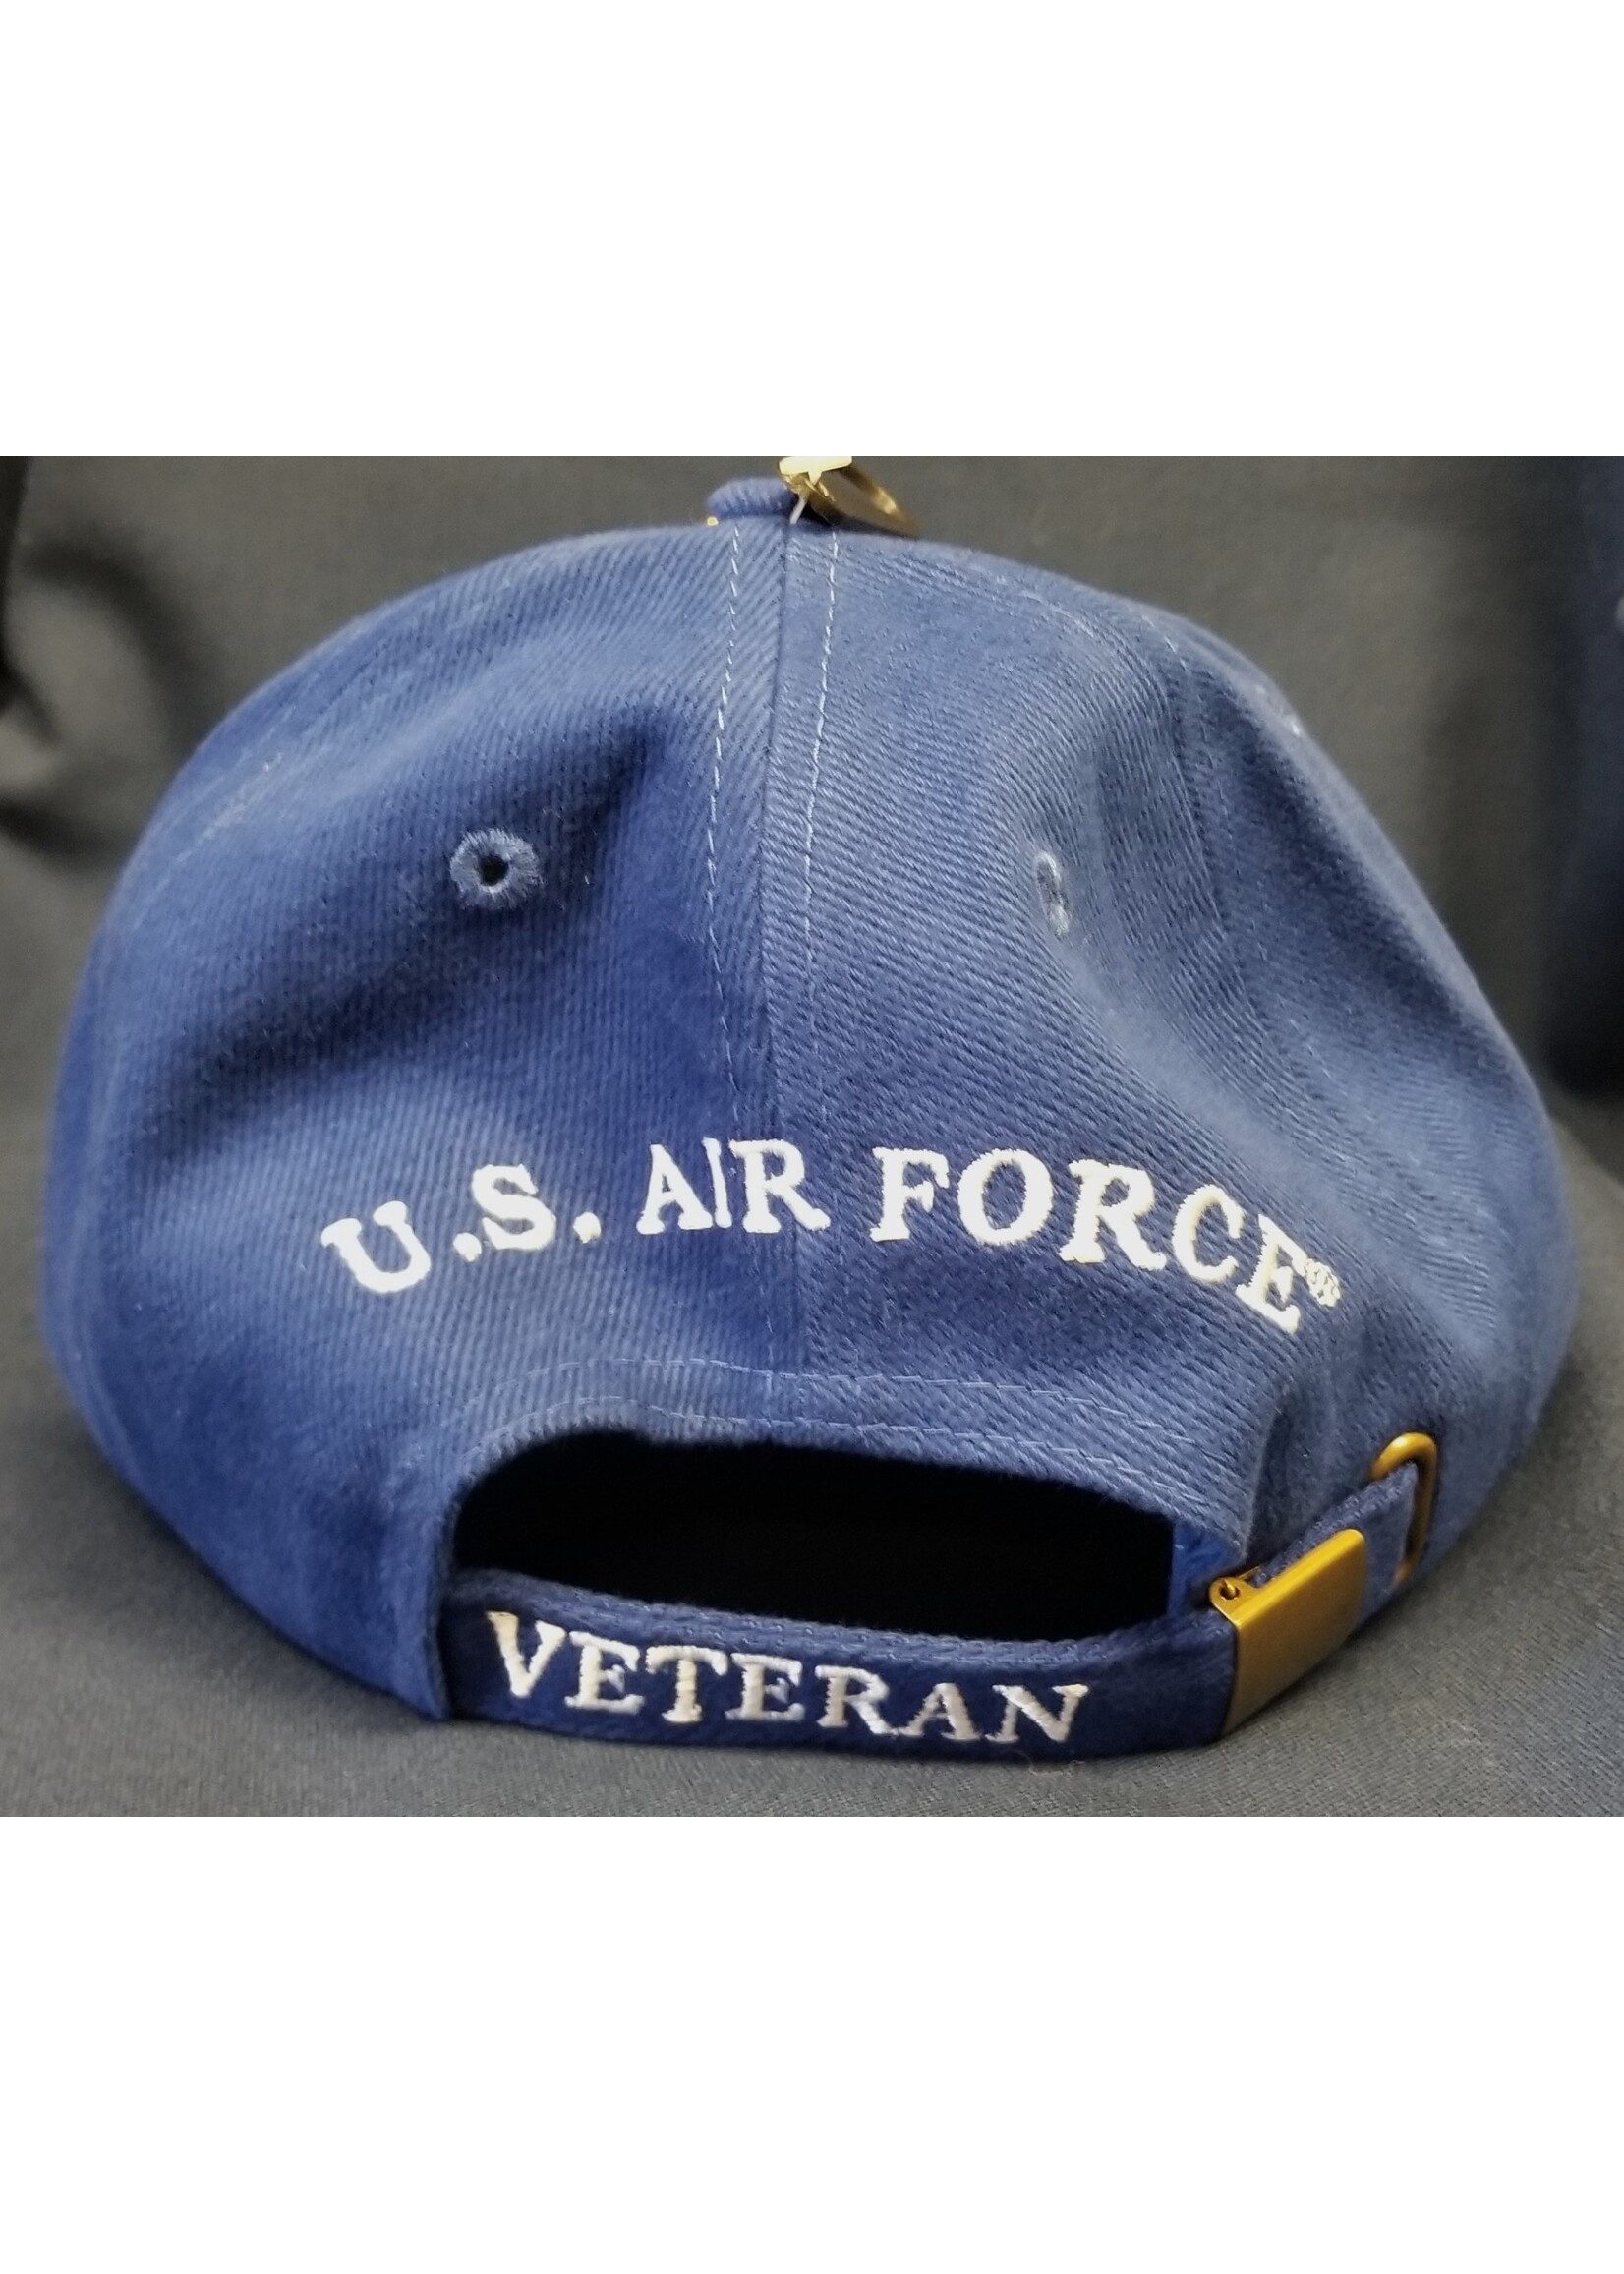 Eagle Emblems Cap USAF Veteran Proud Royal Blue